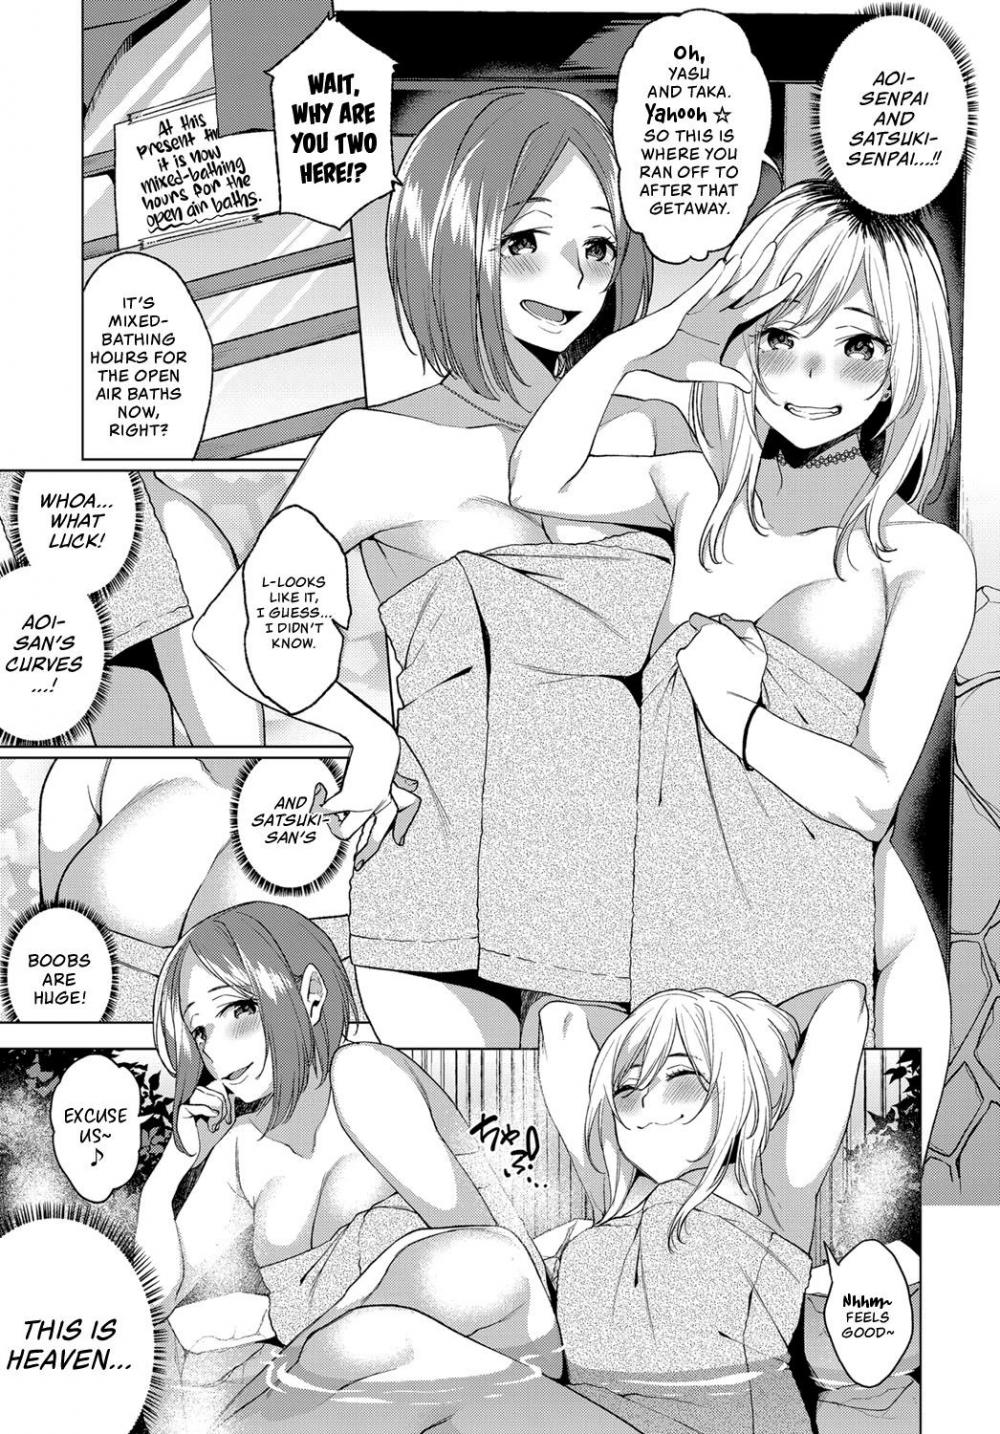 Hentai Manga Comic-Lewd Mixed Bathing at the Open-Air Bath-Read-3